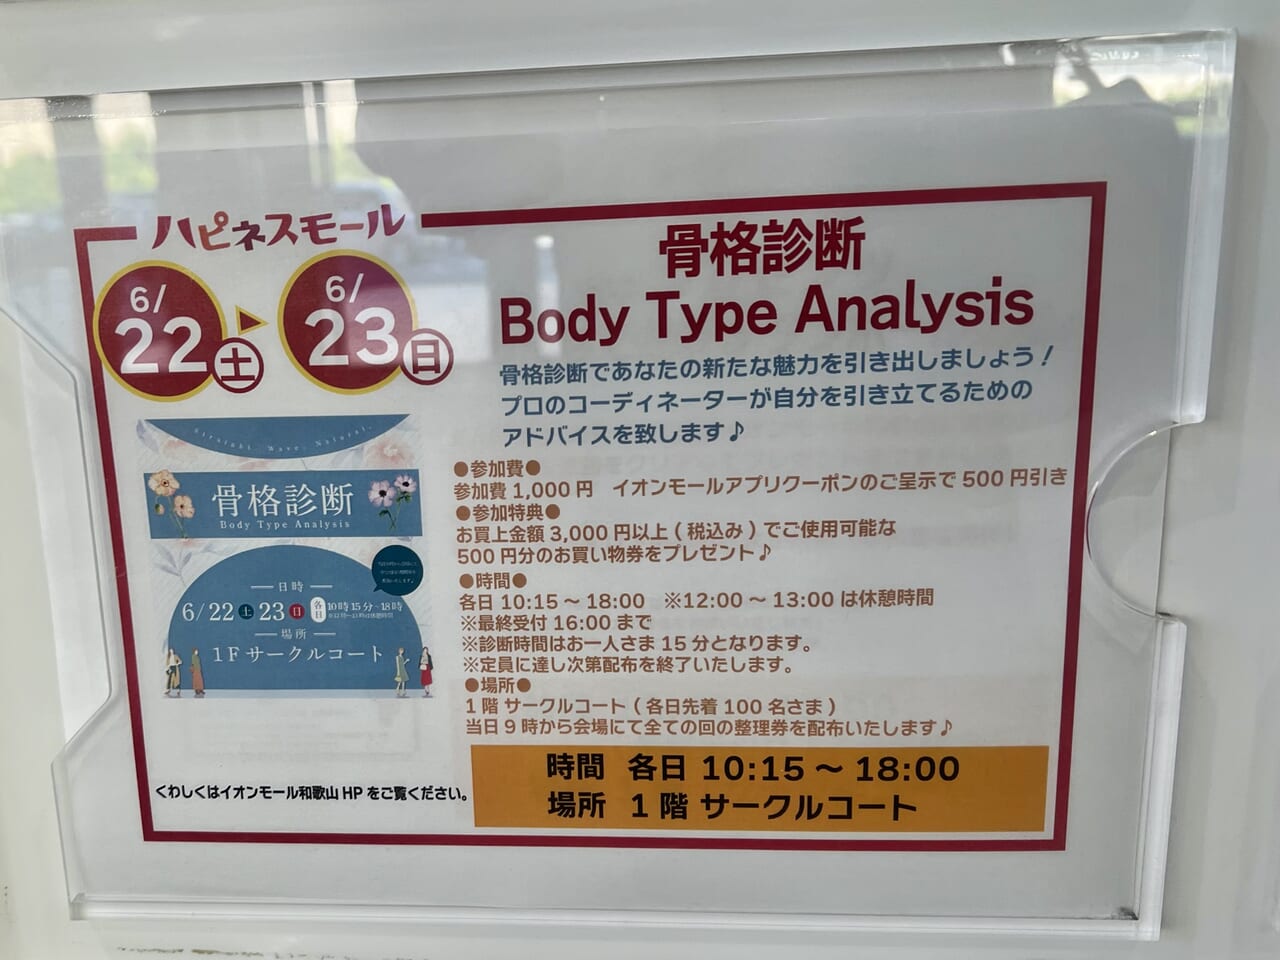 骨格診断 Body Type Analysis